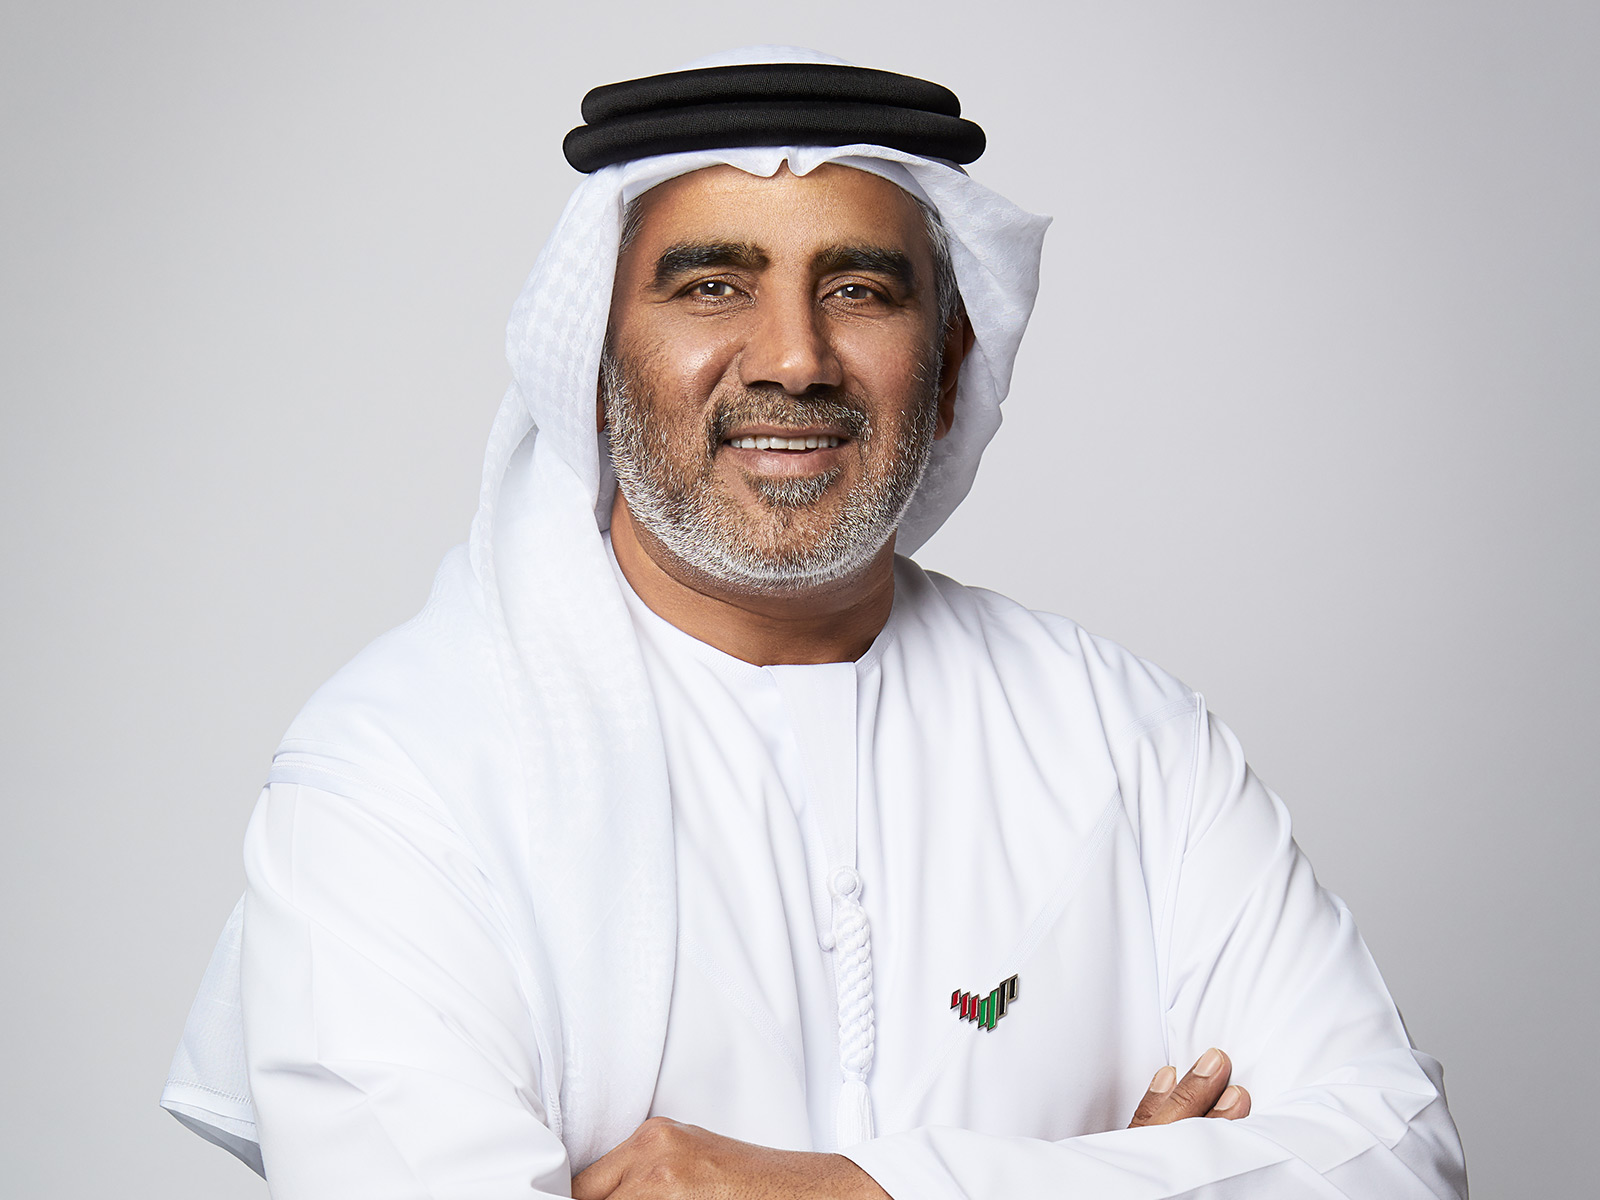 Our Leaders - Abu Dhabi National Oil Company